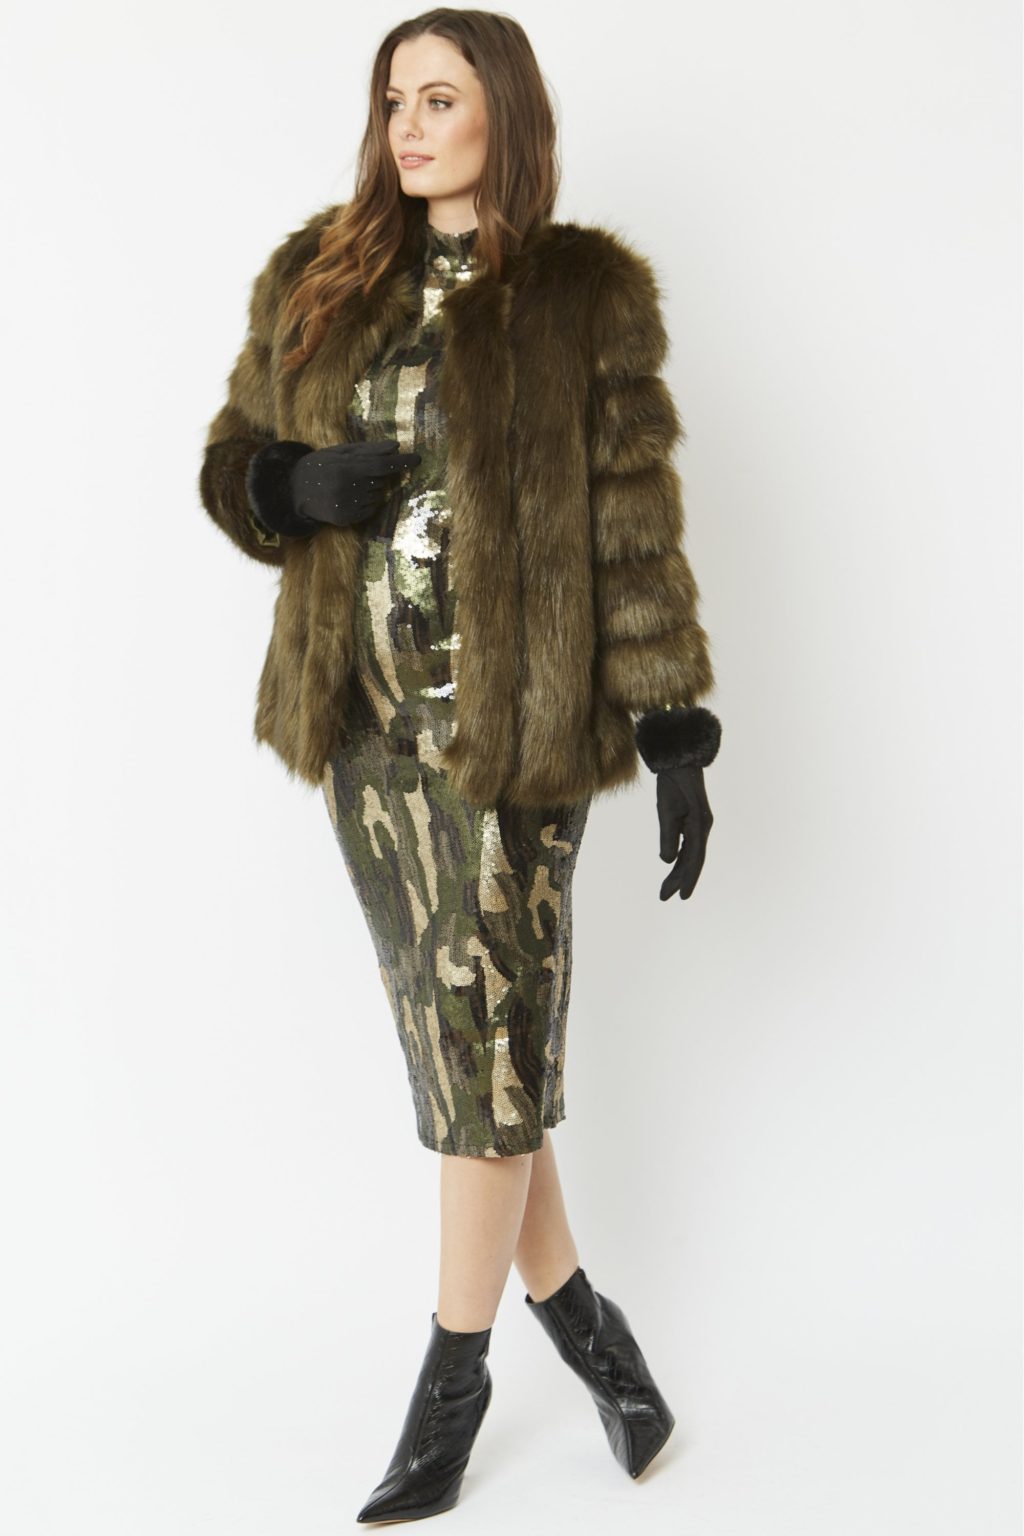 Faux Fur Coat 2 140+ Lovely Women's Outfit Ideas for Winter - 53